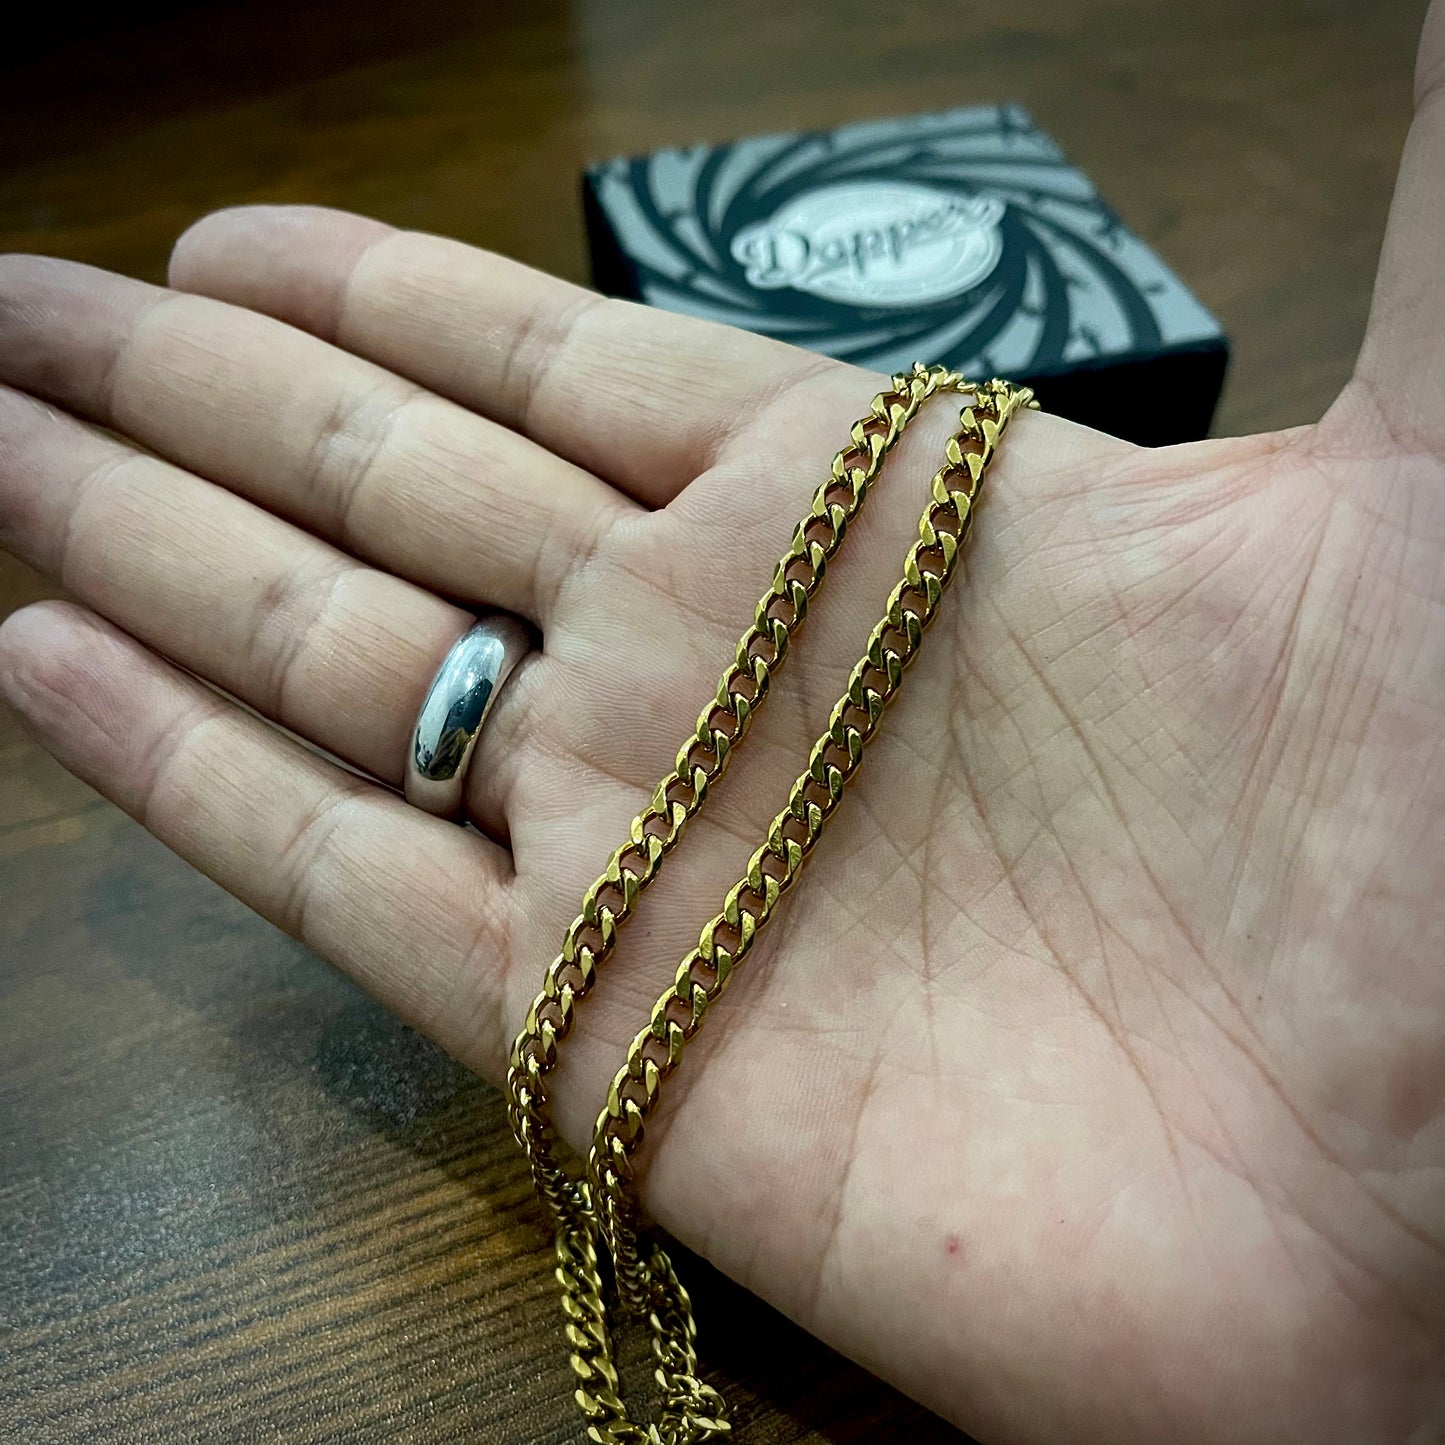 5mm Golden steel curb link neck chain for men in pakistan